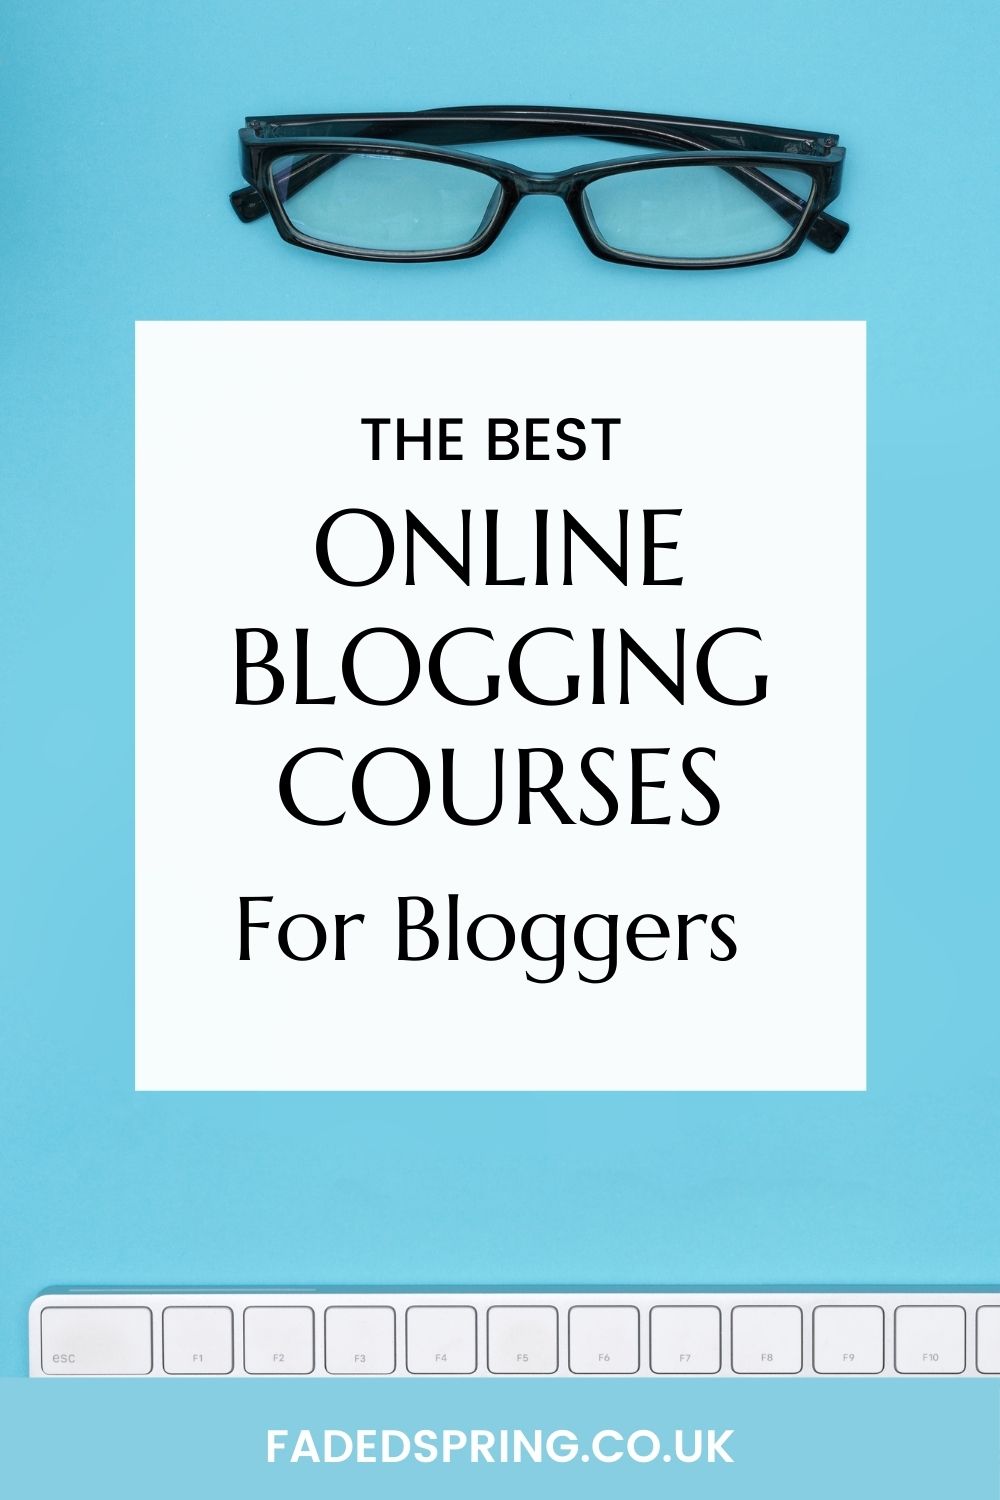 <img src="the.jpg" alt="the best online blogging courses for bloggers"/> 